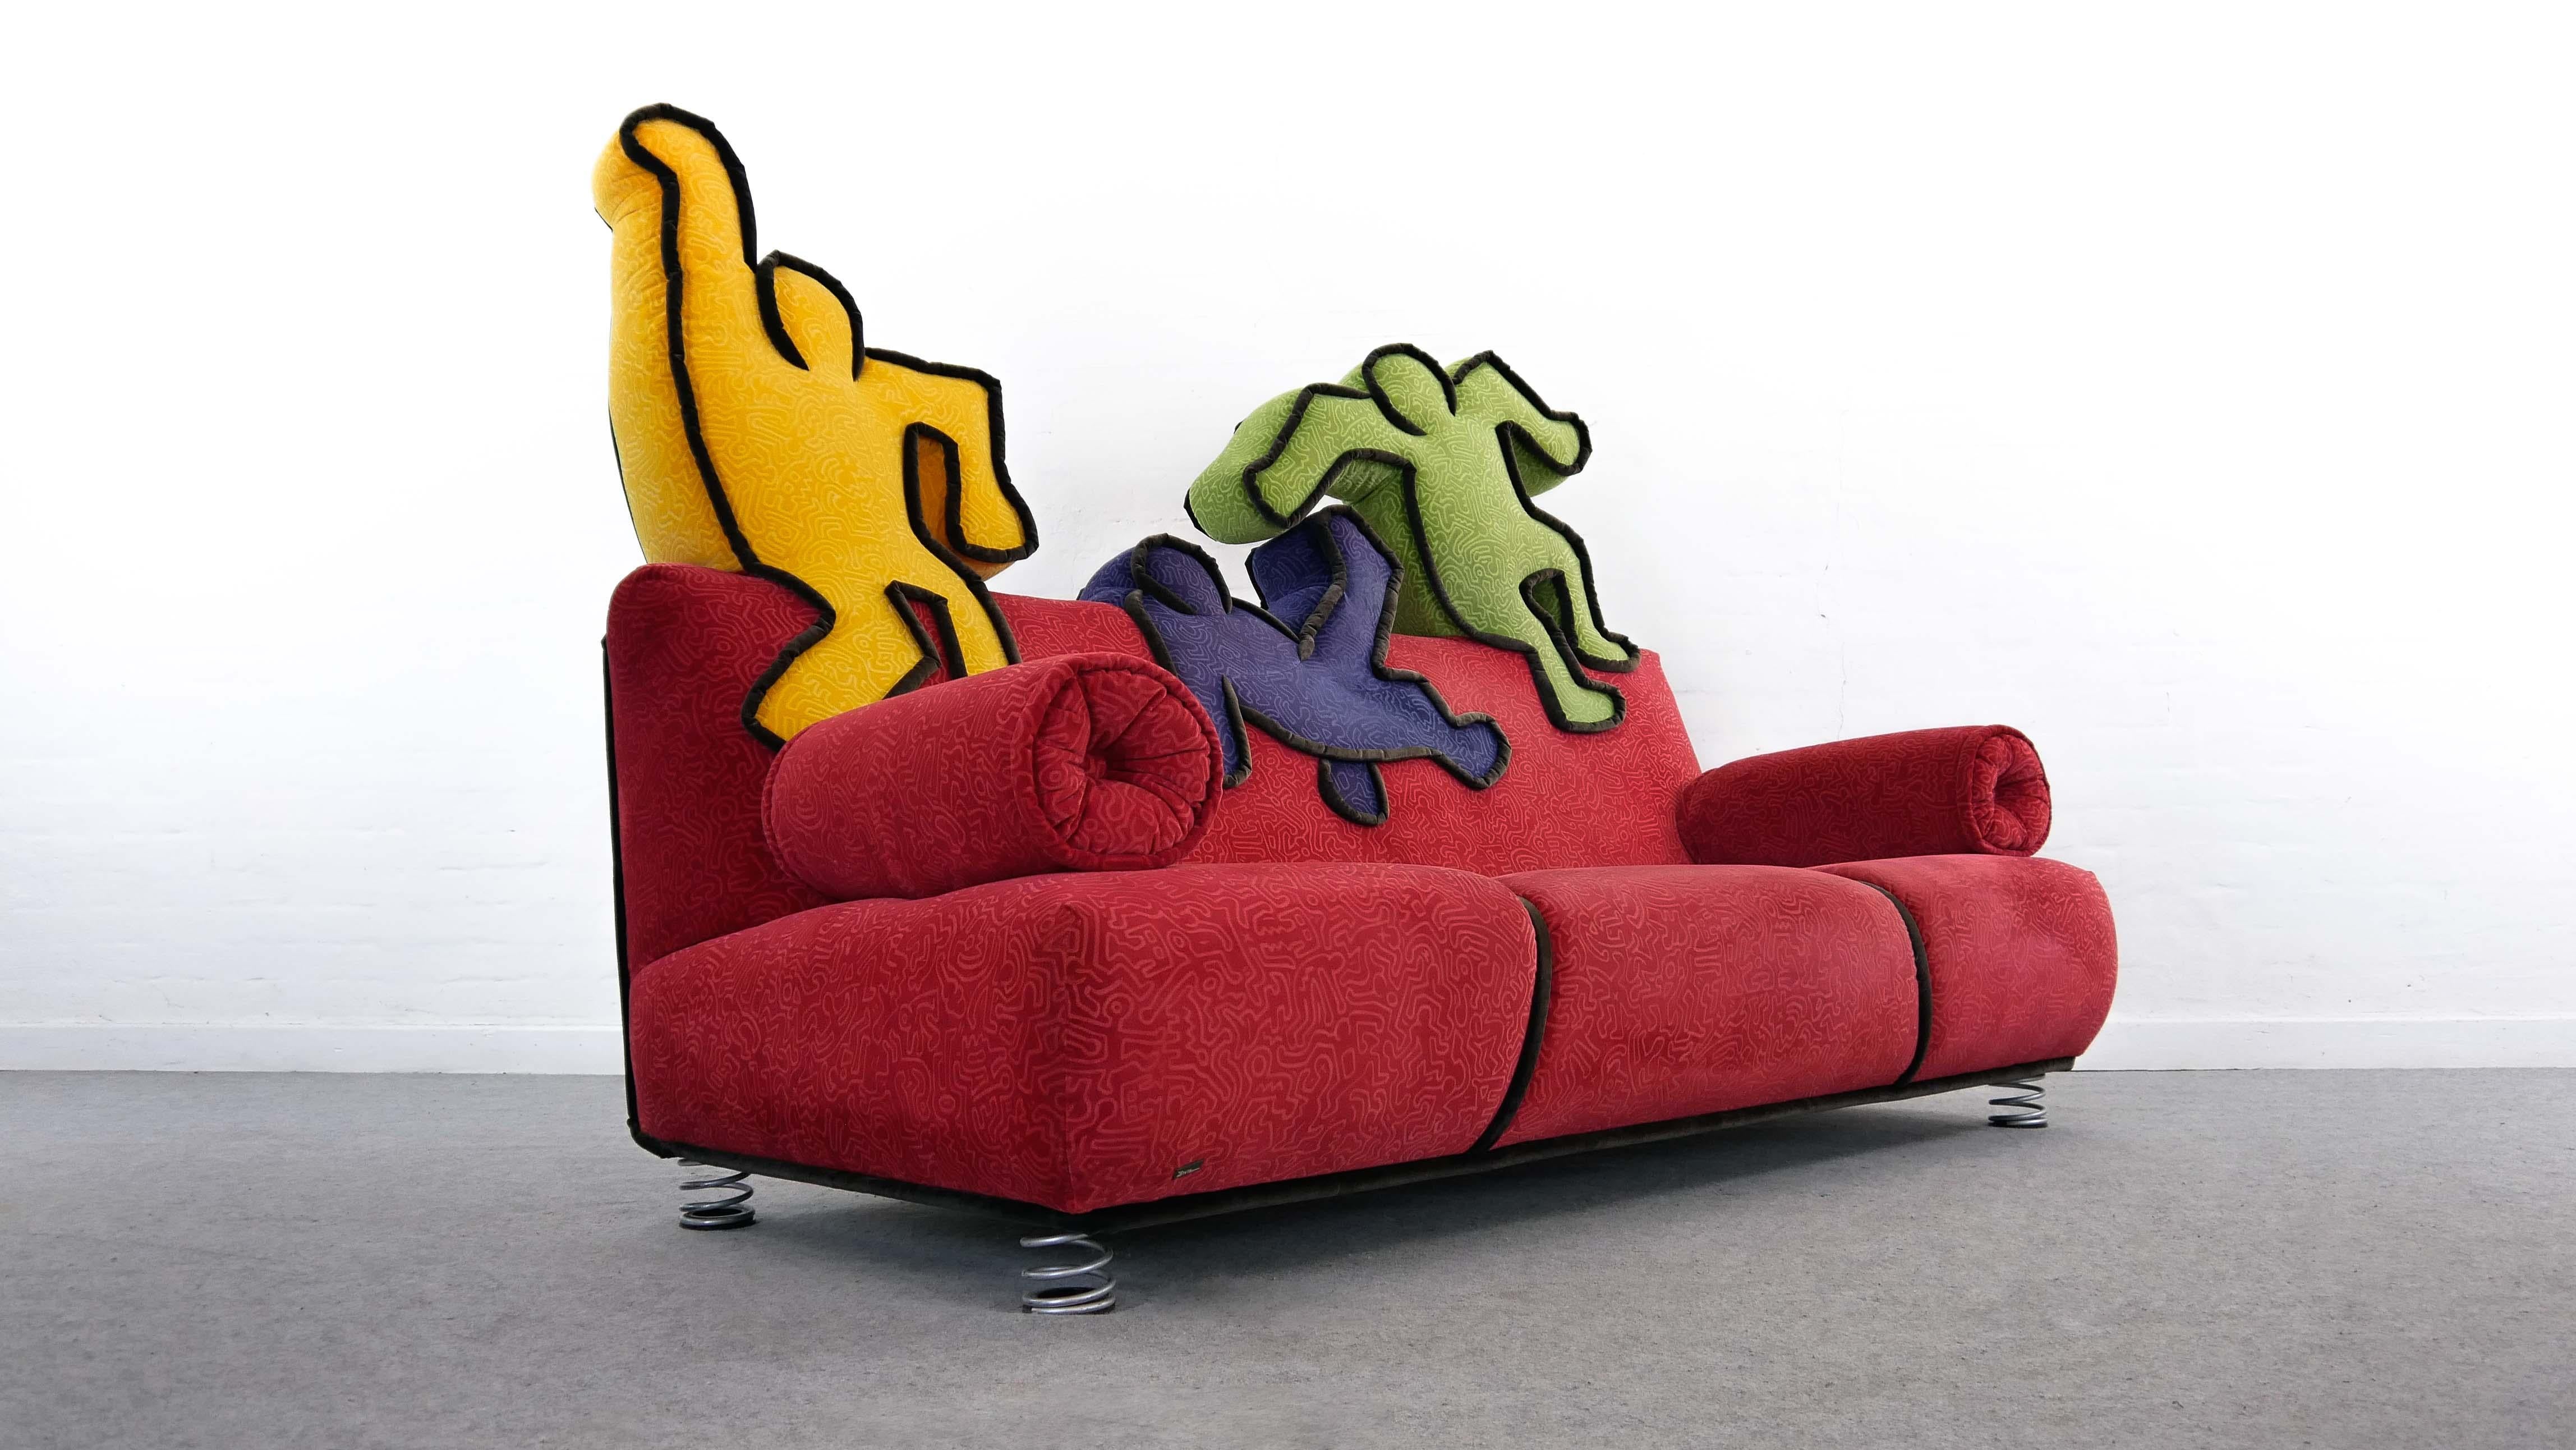 Post-Modern Keith Haring Sofa by Bretz 2002 Pop Art